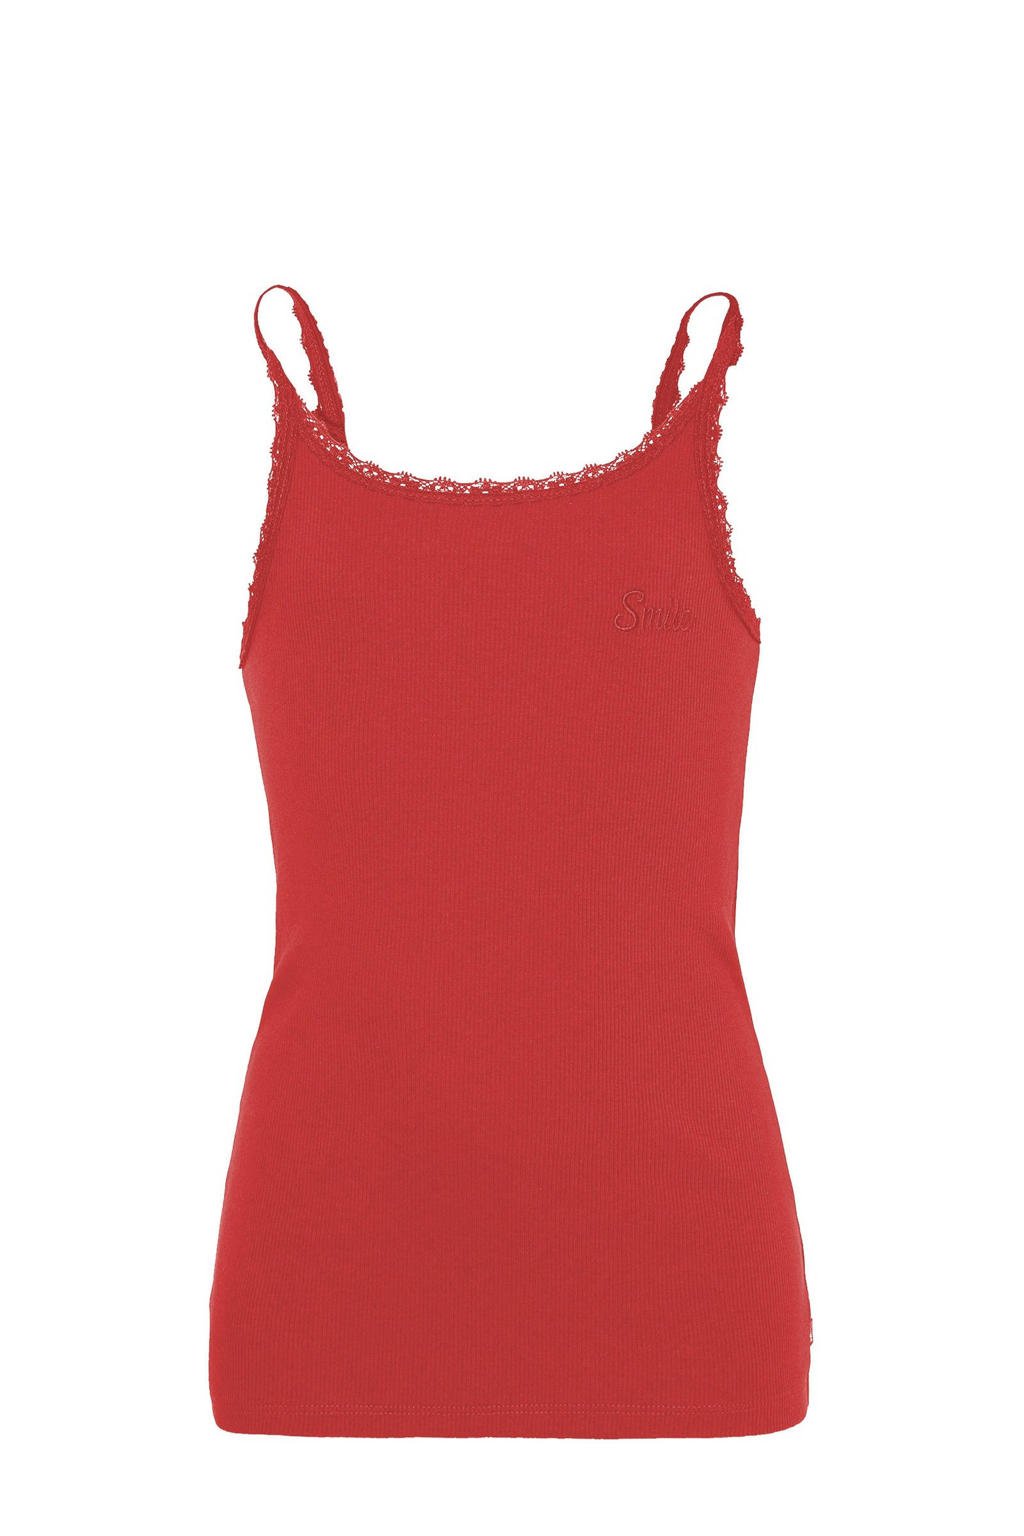 Rode meisjes WE Fashion singlet van stretchkatoen met spaghettibandjes, ronde hals en borduursels